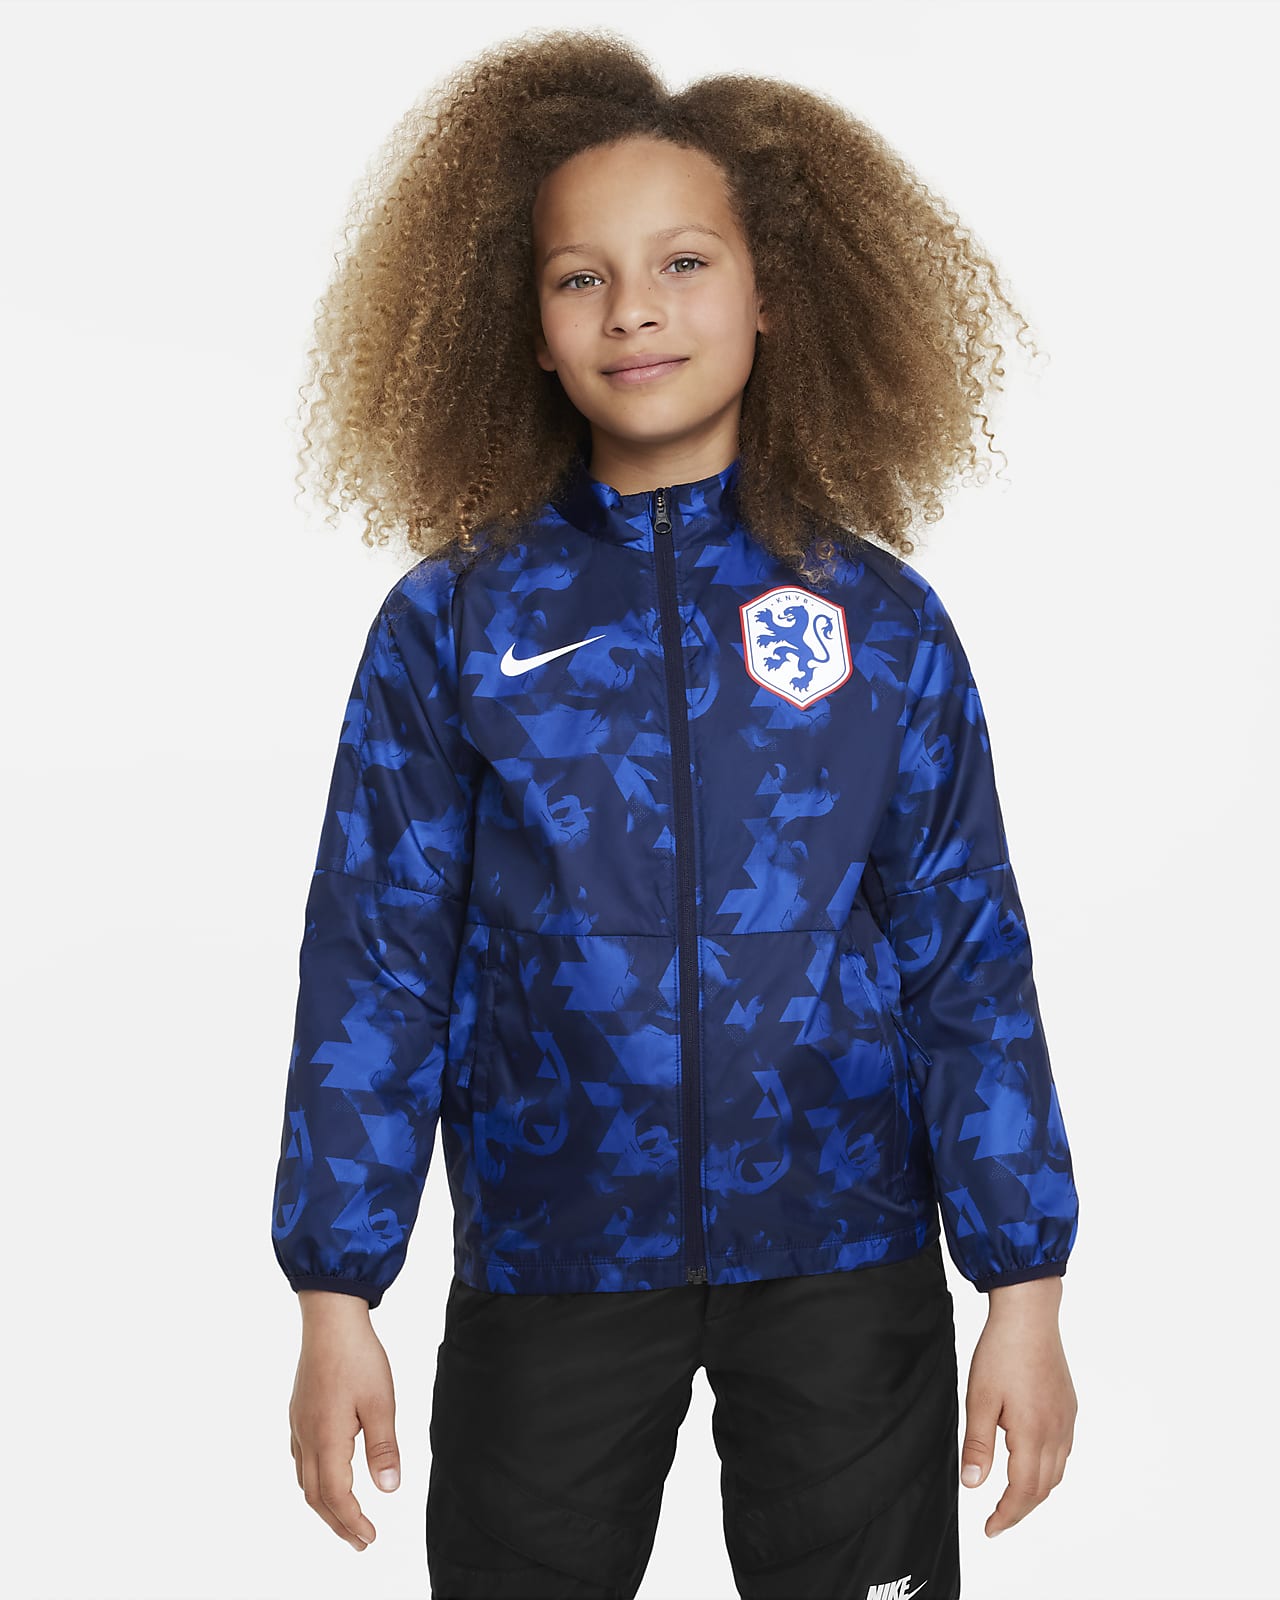 Netherlands Repel Academy AWF Older Kids' Football Jacket